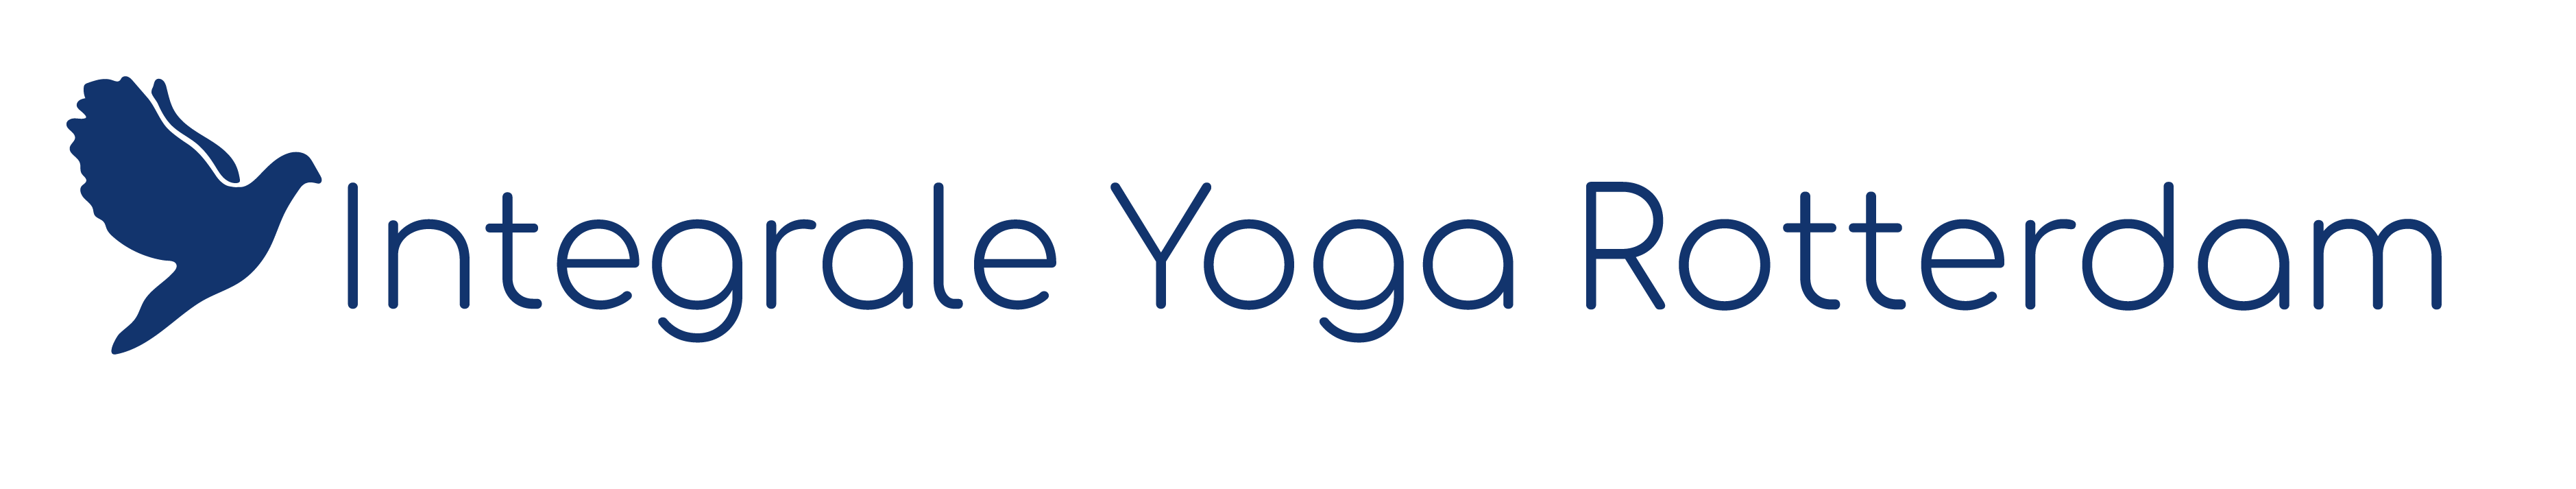 Integrale Yoga Rotterdam